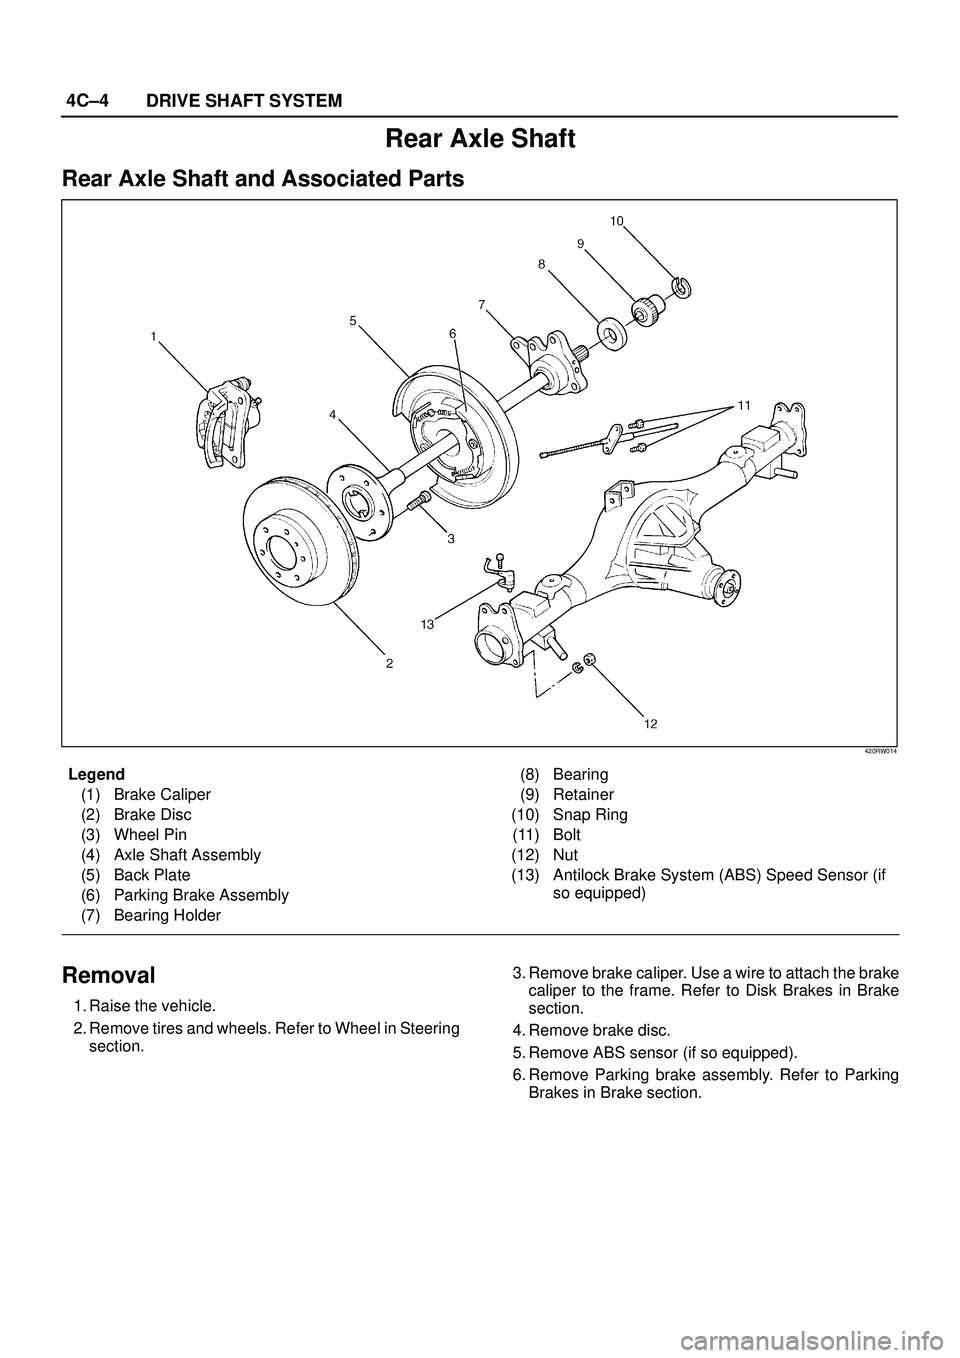 ISUZU TROOPER 1998  Service Owners Guide 4C±4
DRIVE SHAFT SYSTEM
Rear Axle Shaft
Rear Axle Shaft and Associated Parts
420RW014
Legend
(1) Brake Caliper
(2) Brake Disc
(3) Wheel Pin
(4) Axle Shaft Assembly
(5) Back Plate
(6) Parking Brake As